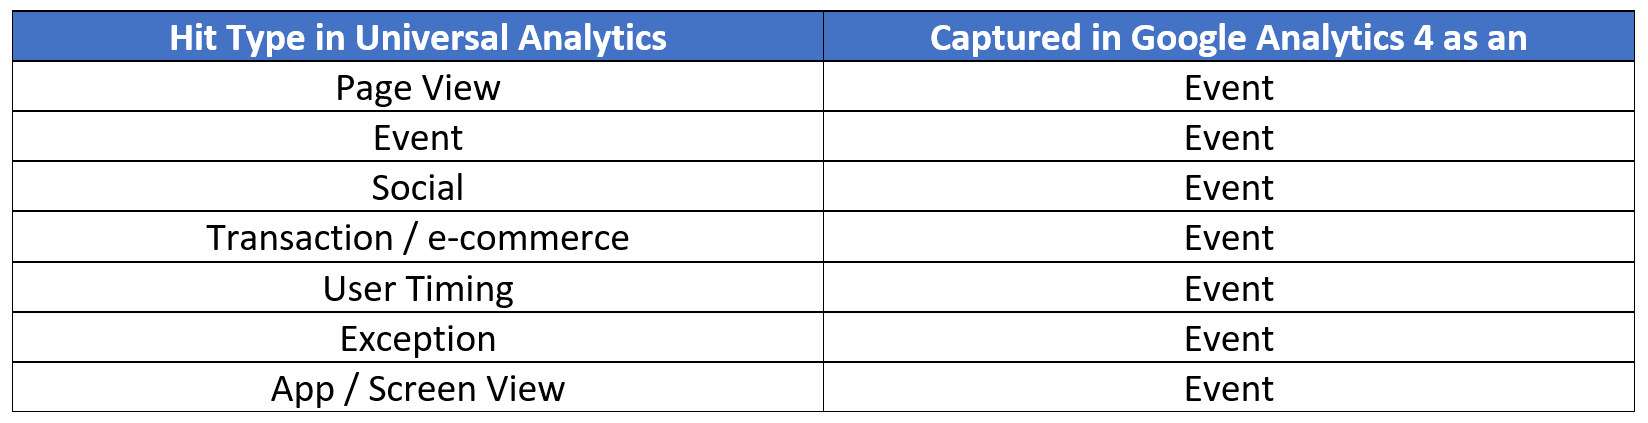 6. How hit types in Universal Analytics are captured on Google Analytics 4